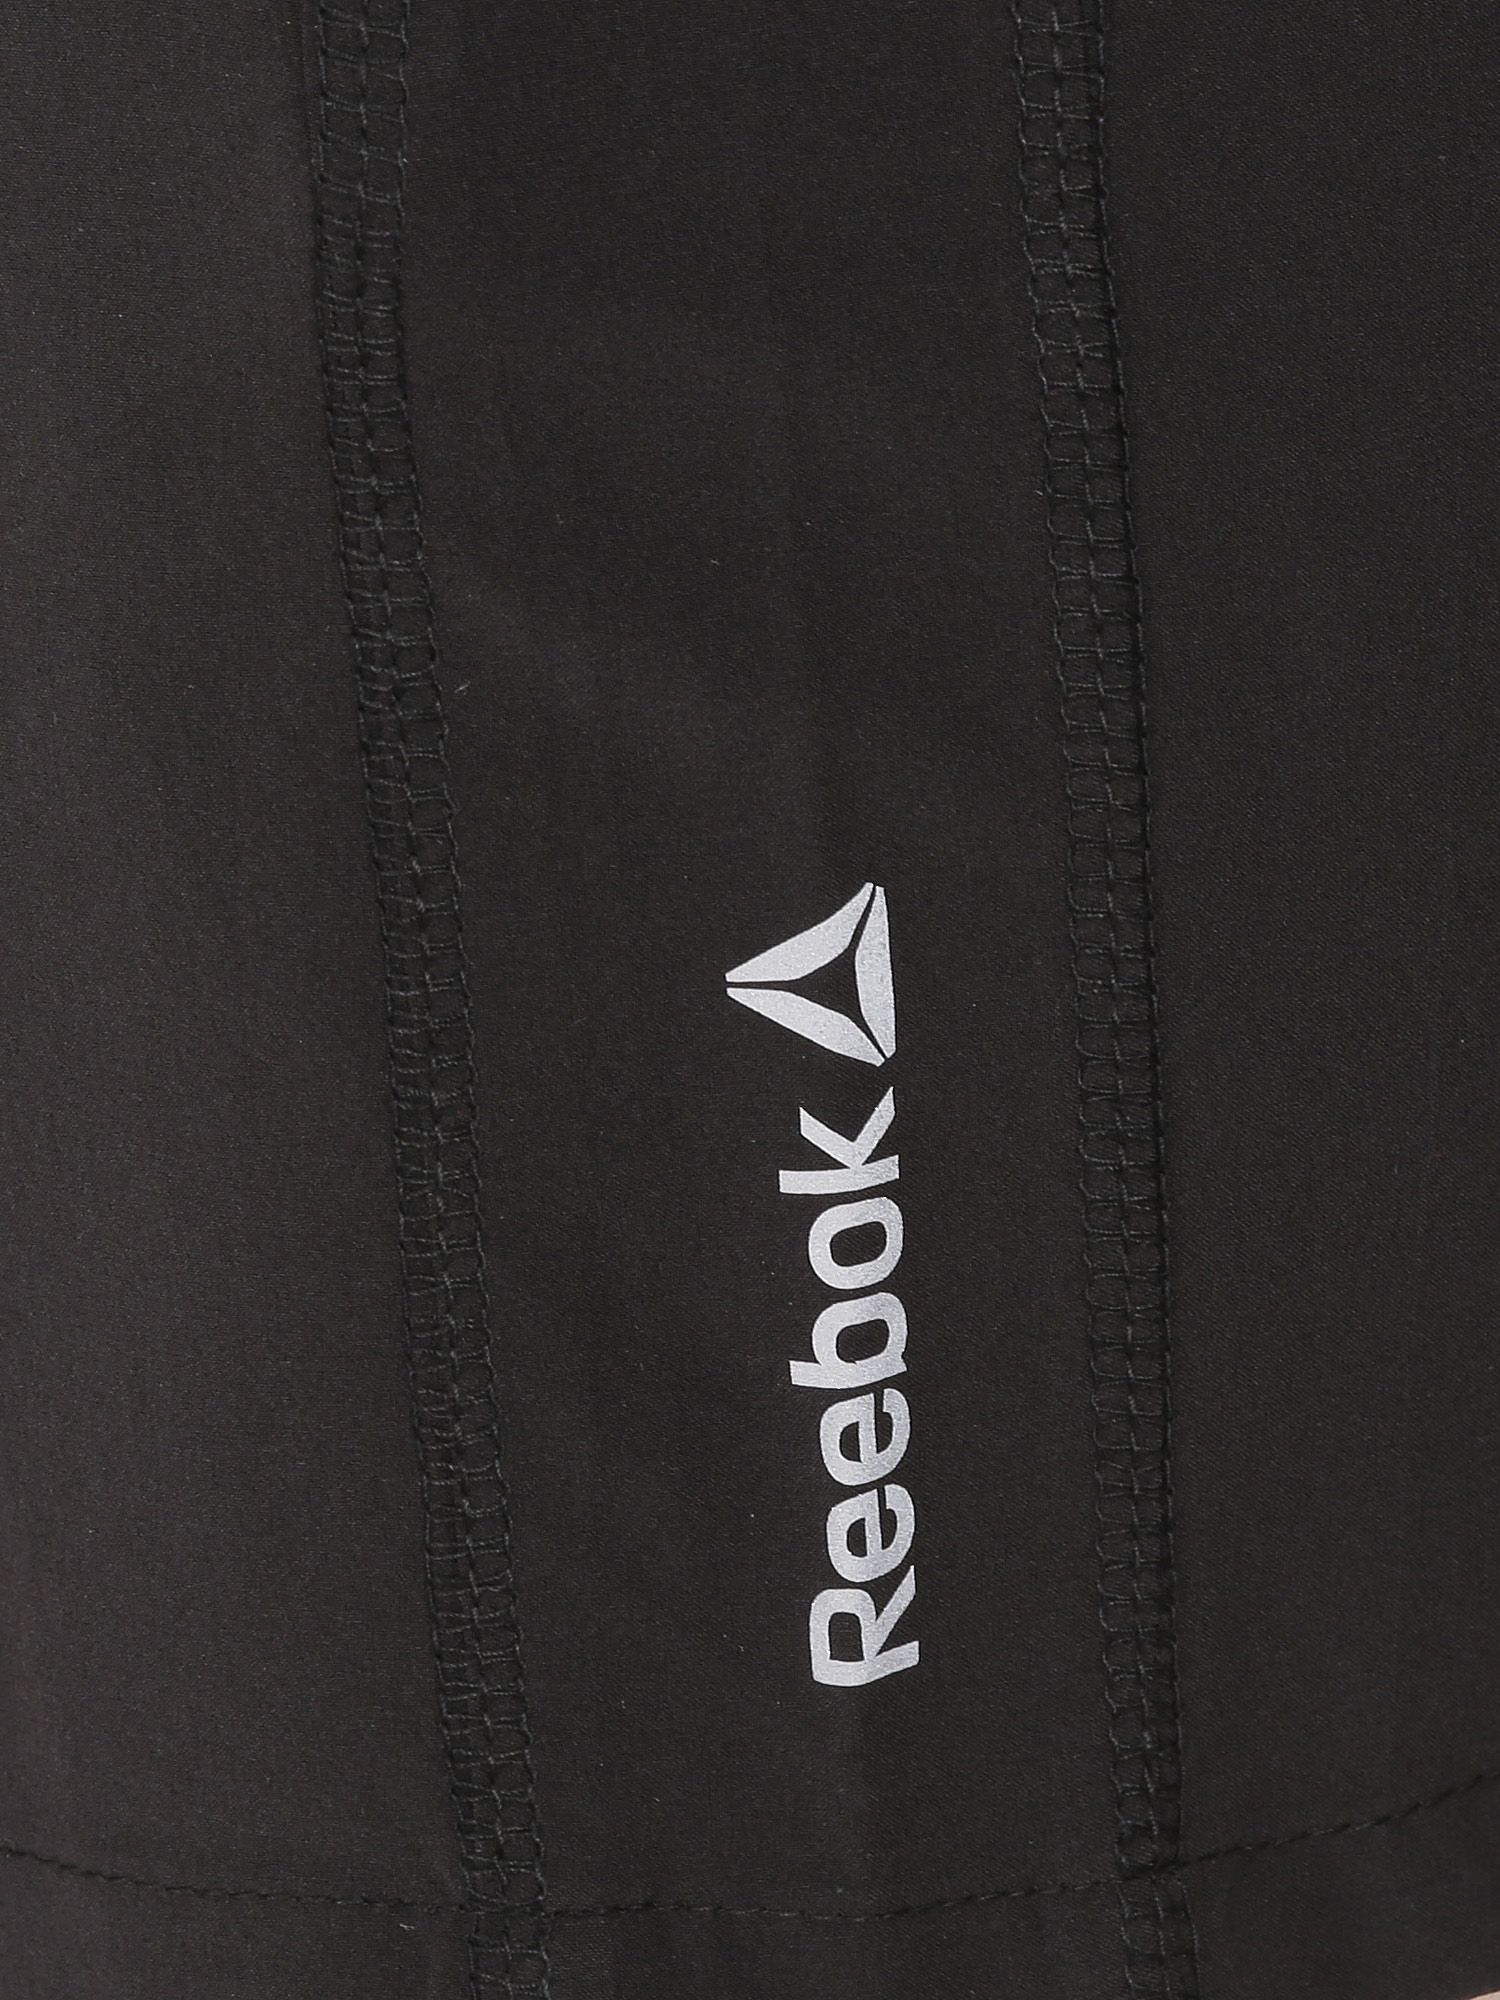 Reebok Black Polyester Lycra Running Shorts - Buy Reebok Black ...